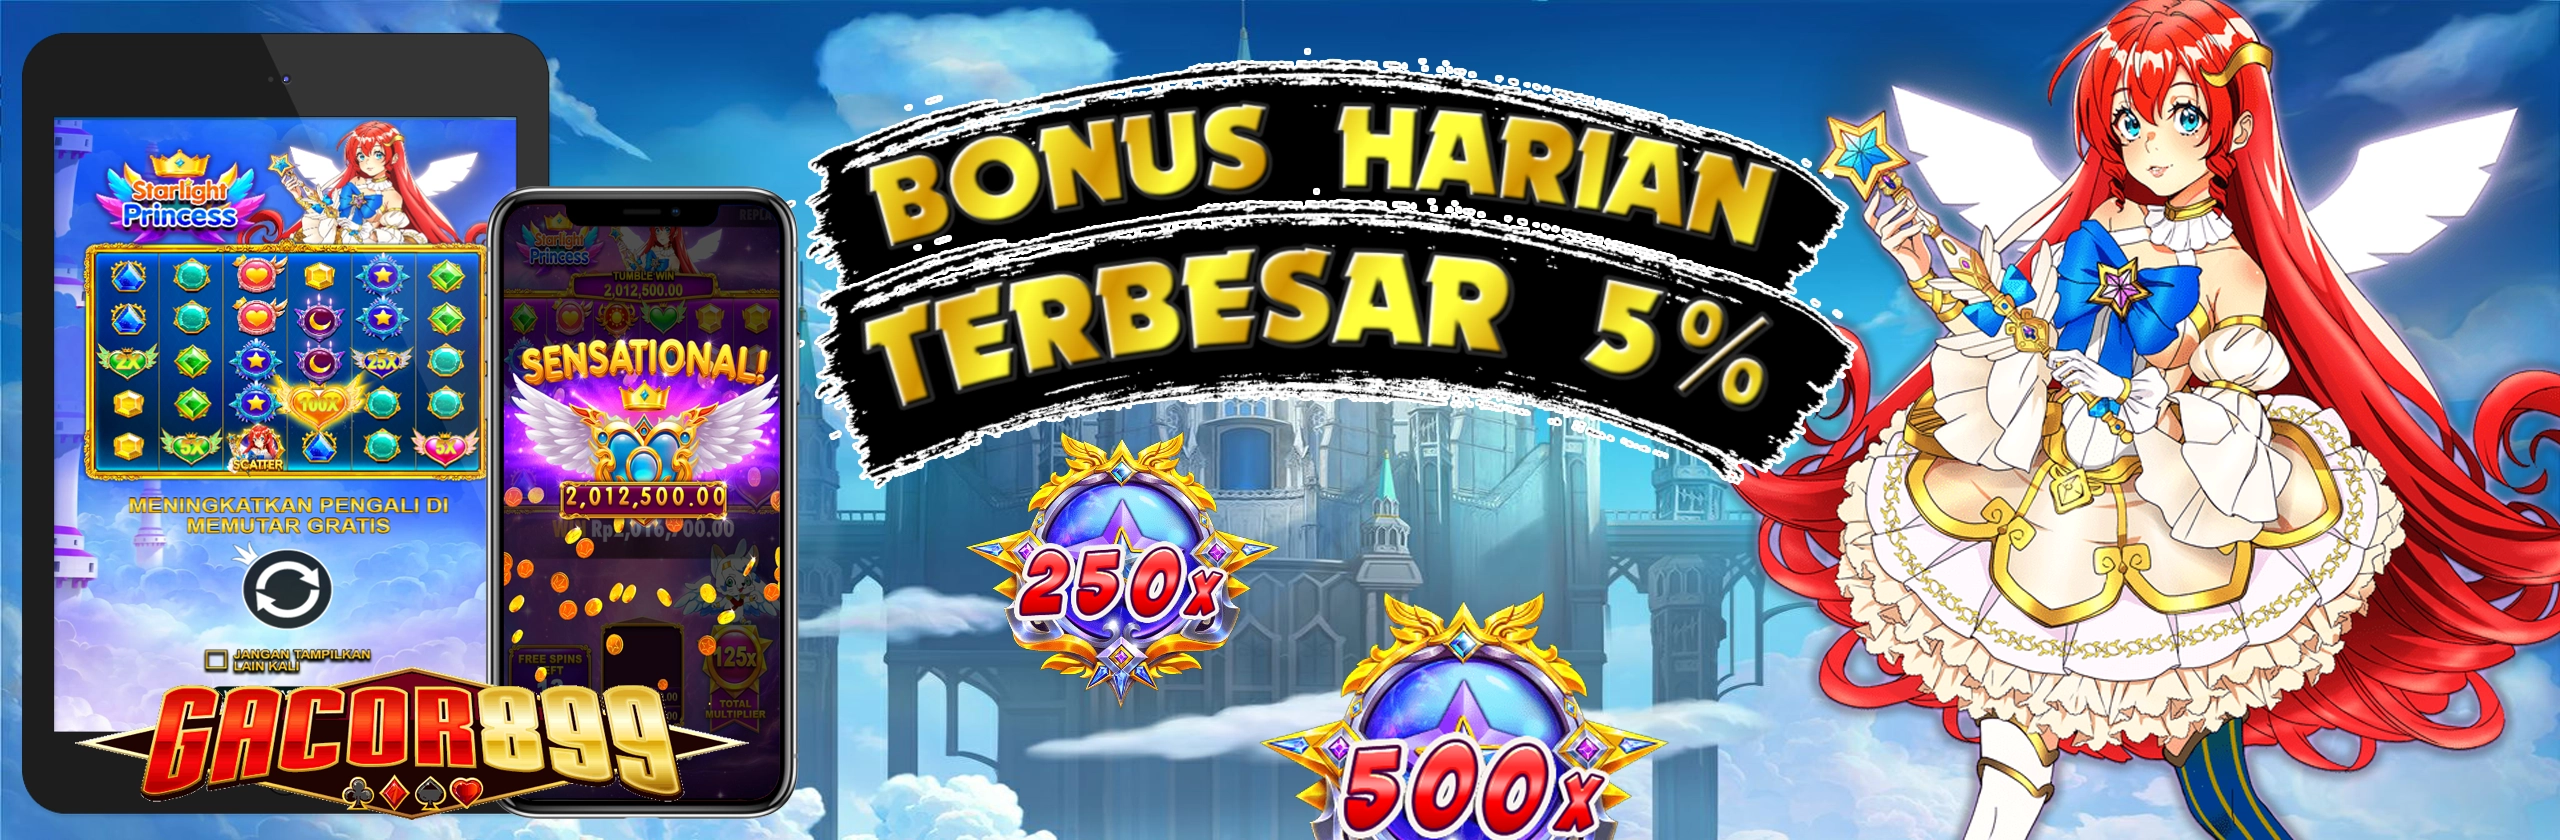 Bonus Depo Harian 5%